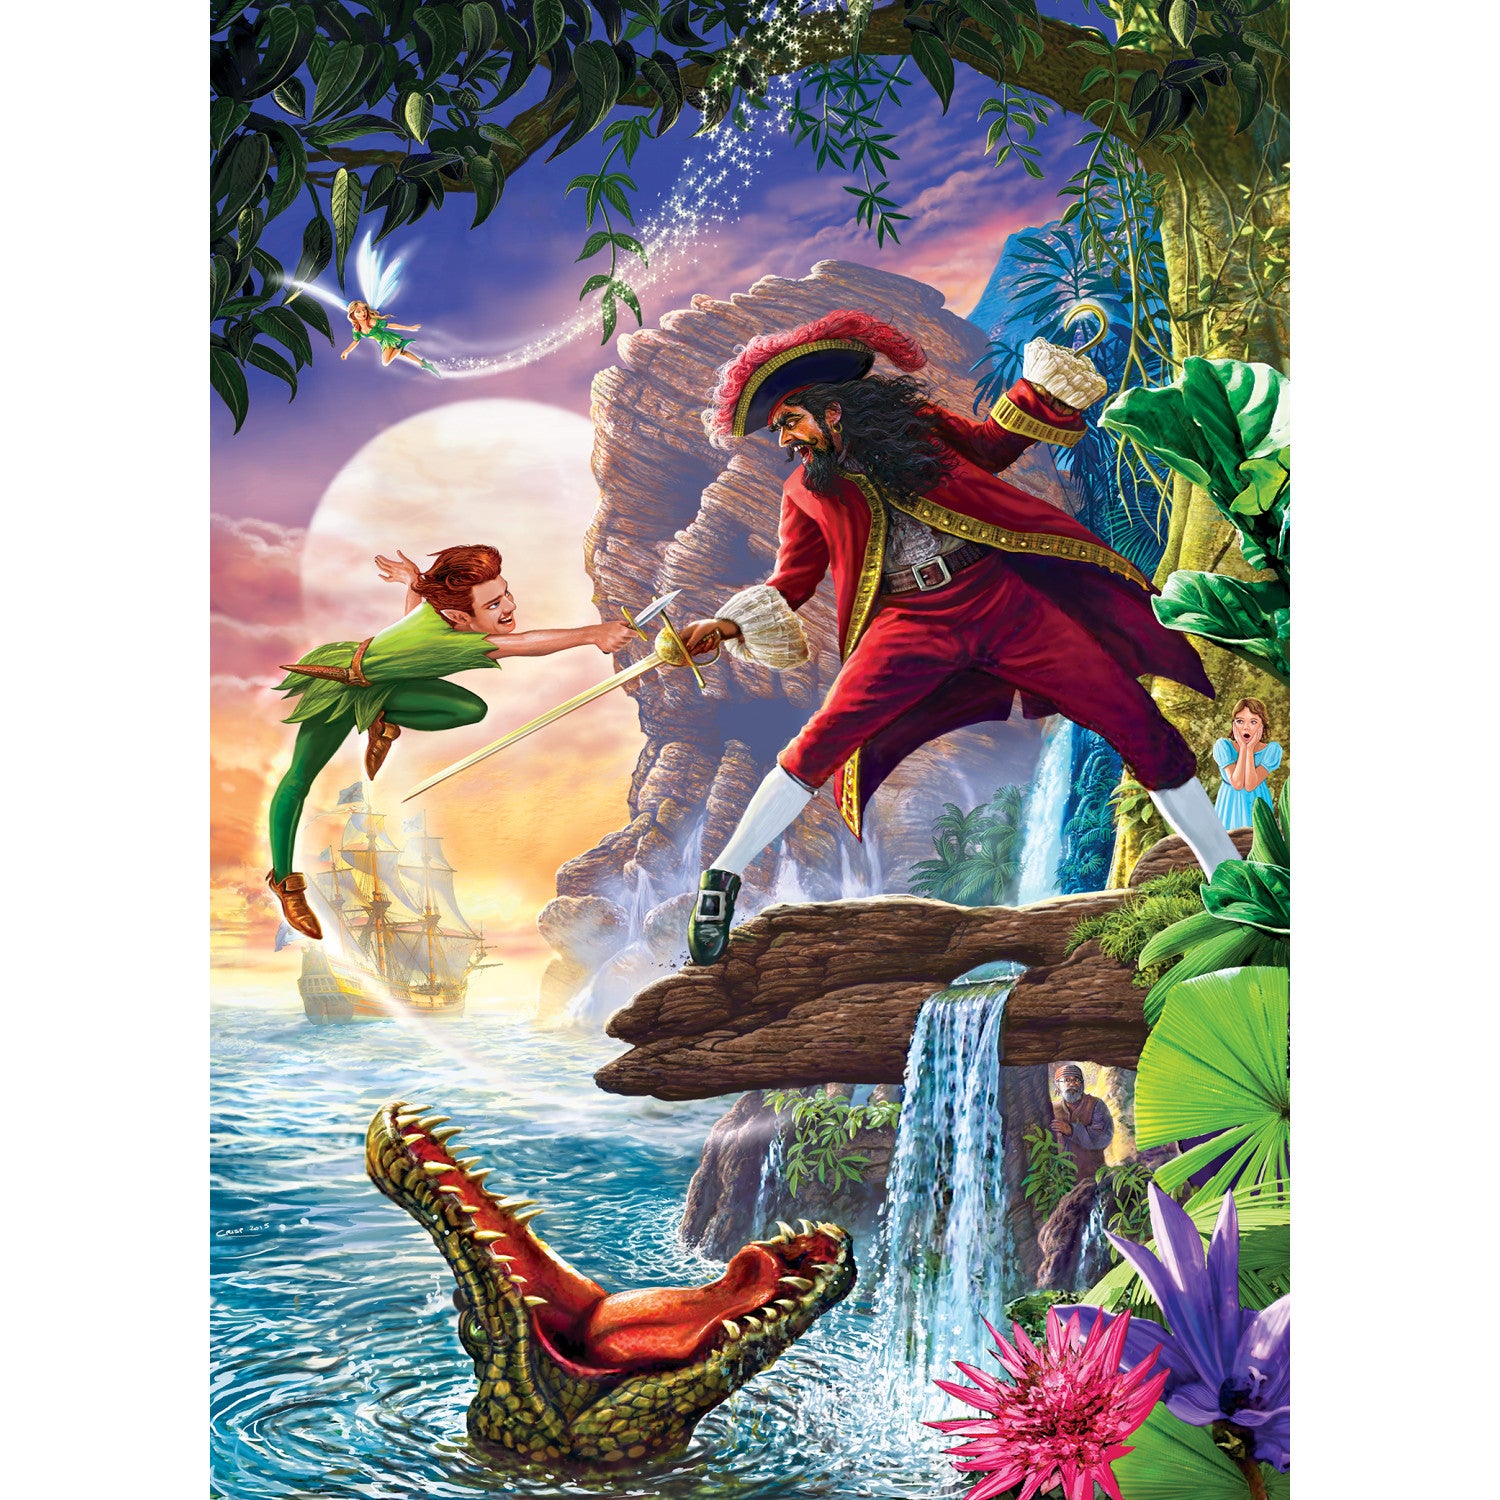 Classic Fairytales - Peter Pan 1000 Piece Puzzle